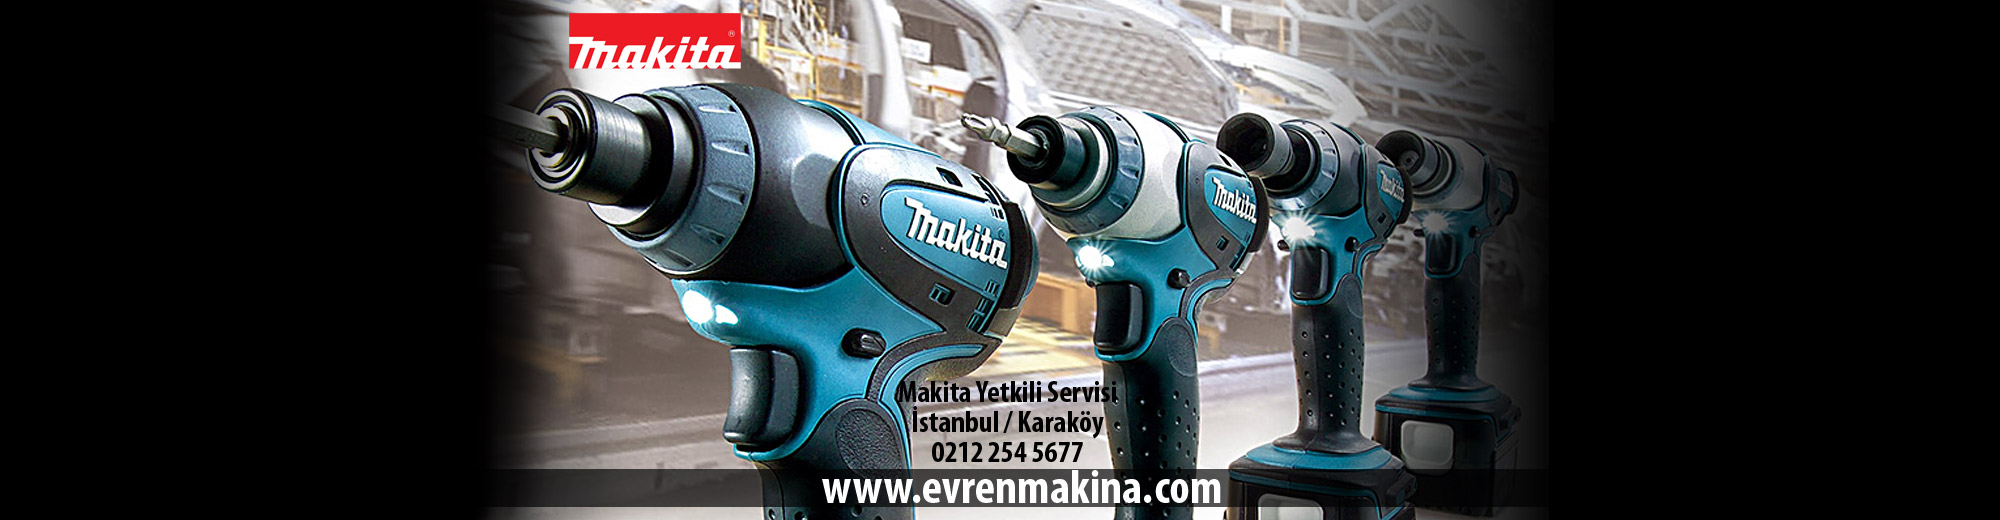 Makita Yetkili Servisi İstanbul